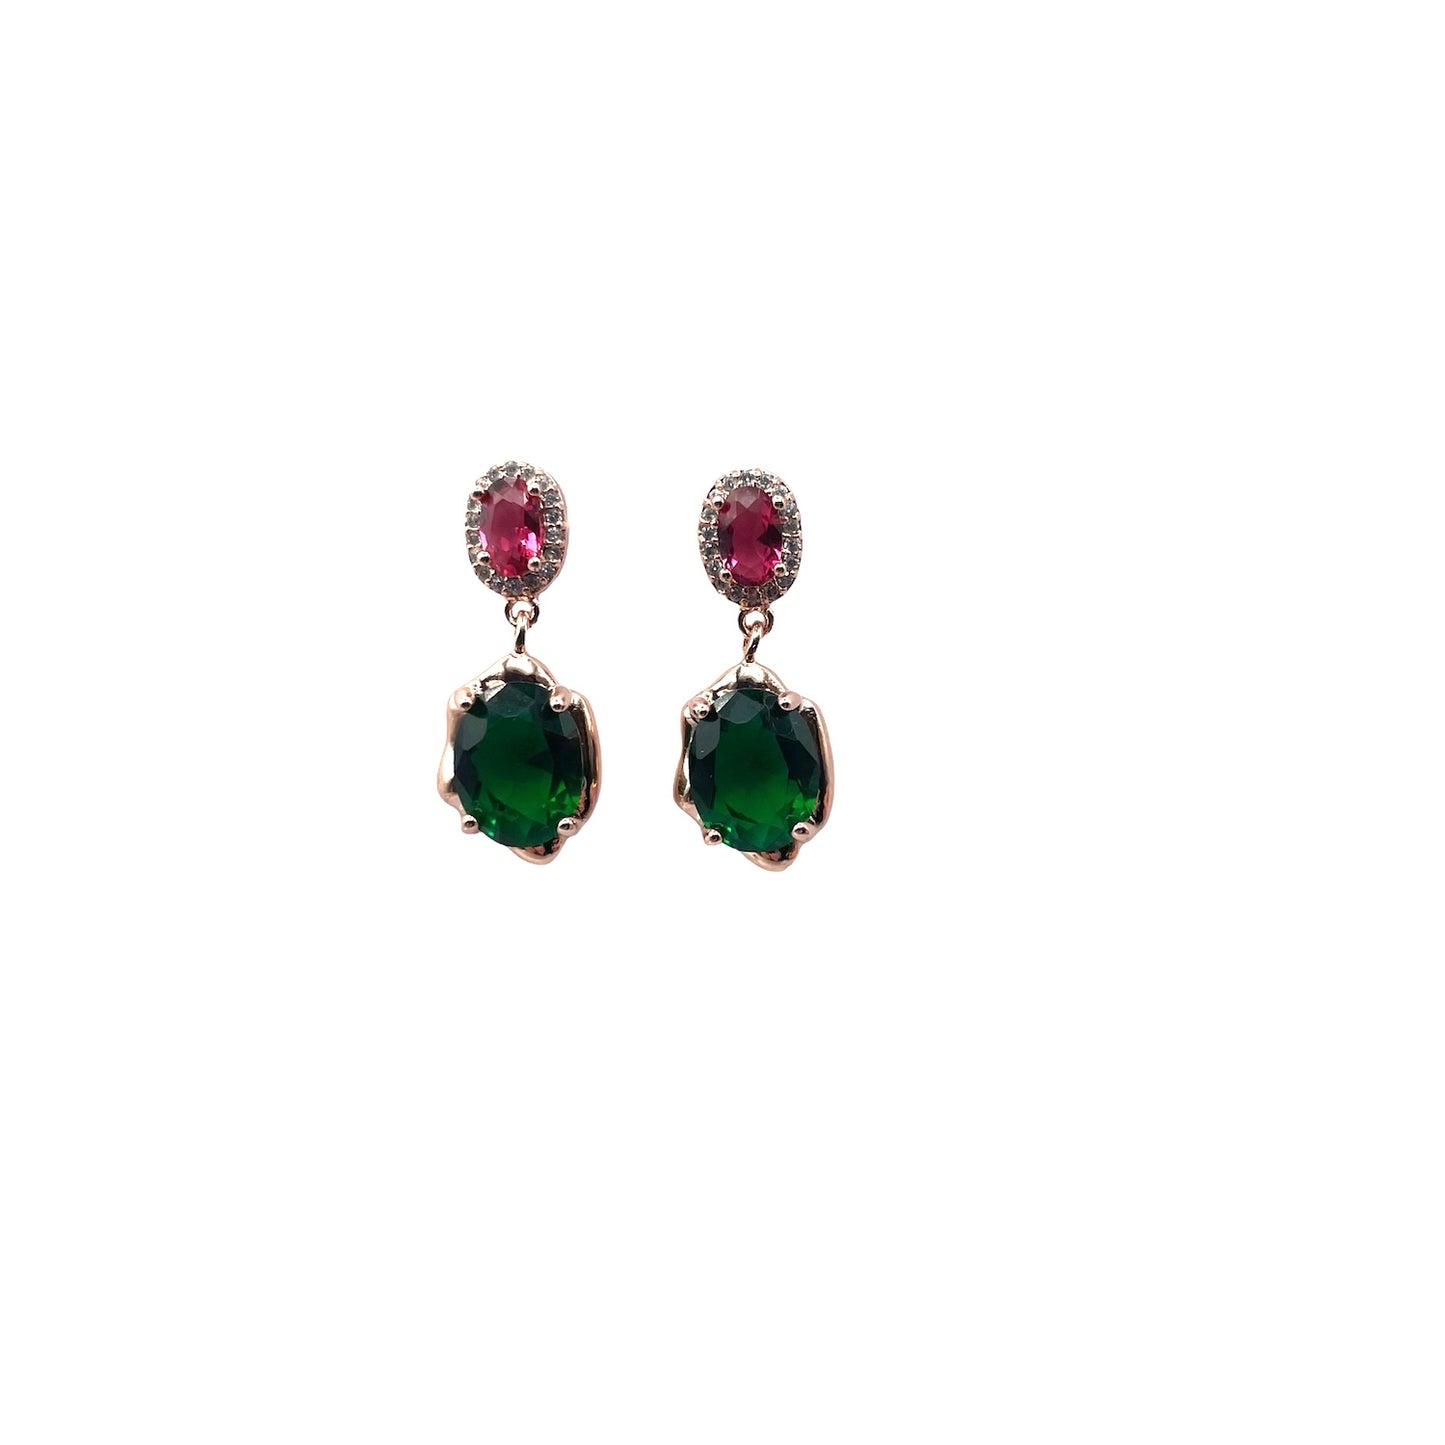 Vintage emerald style earrings